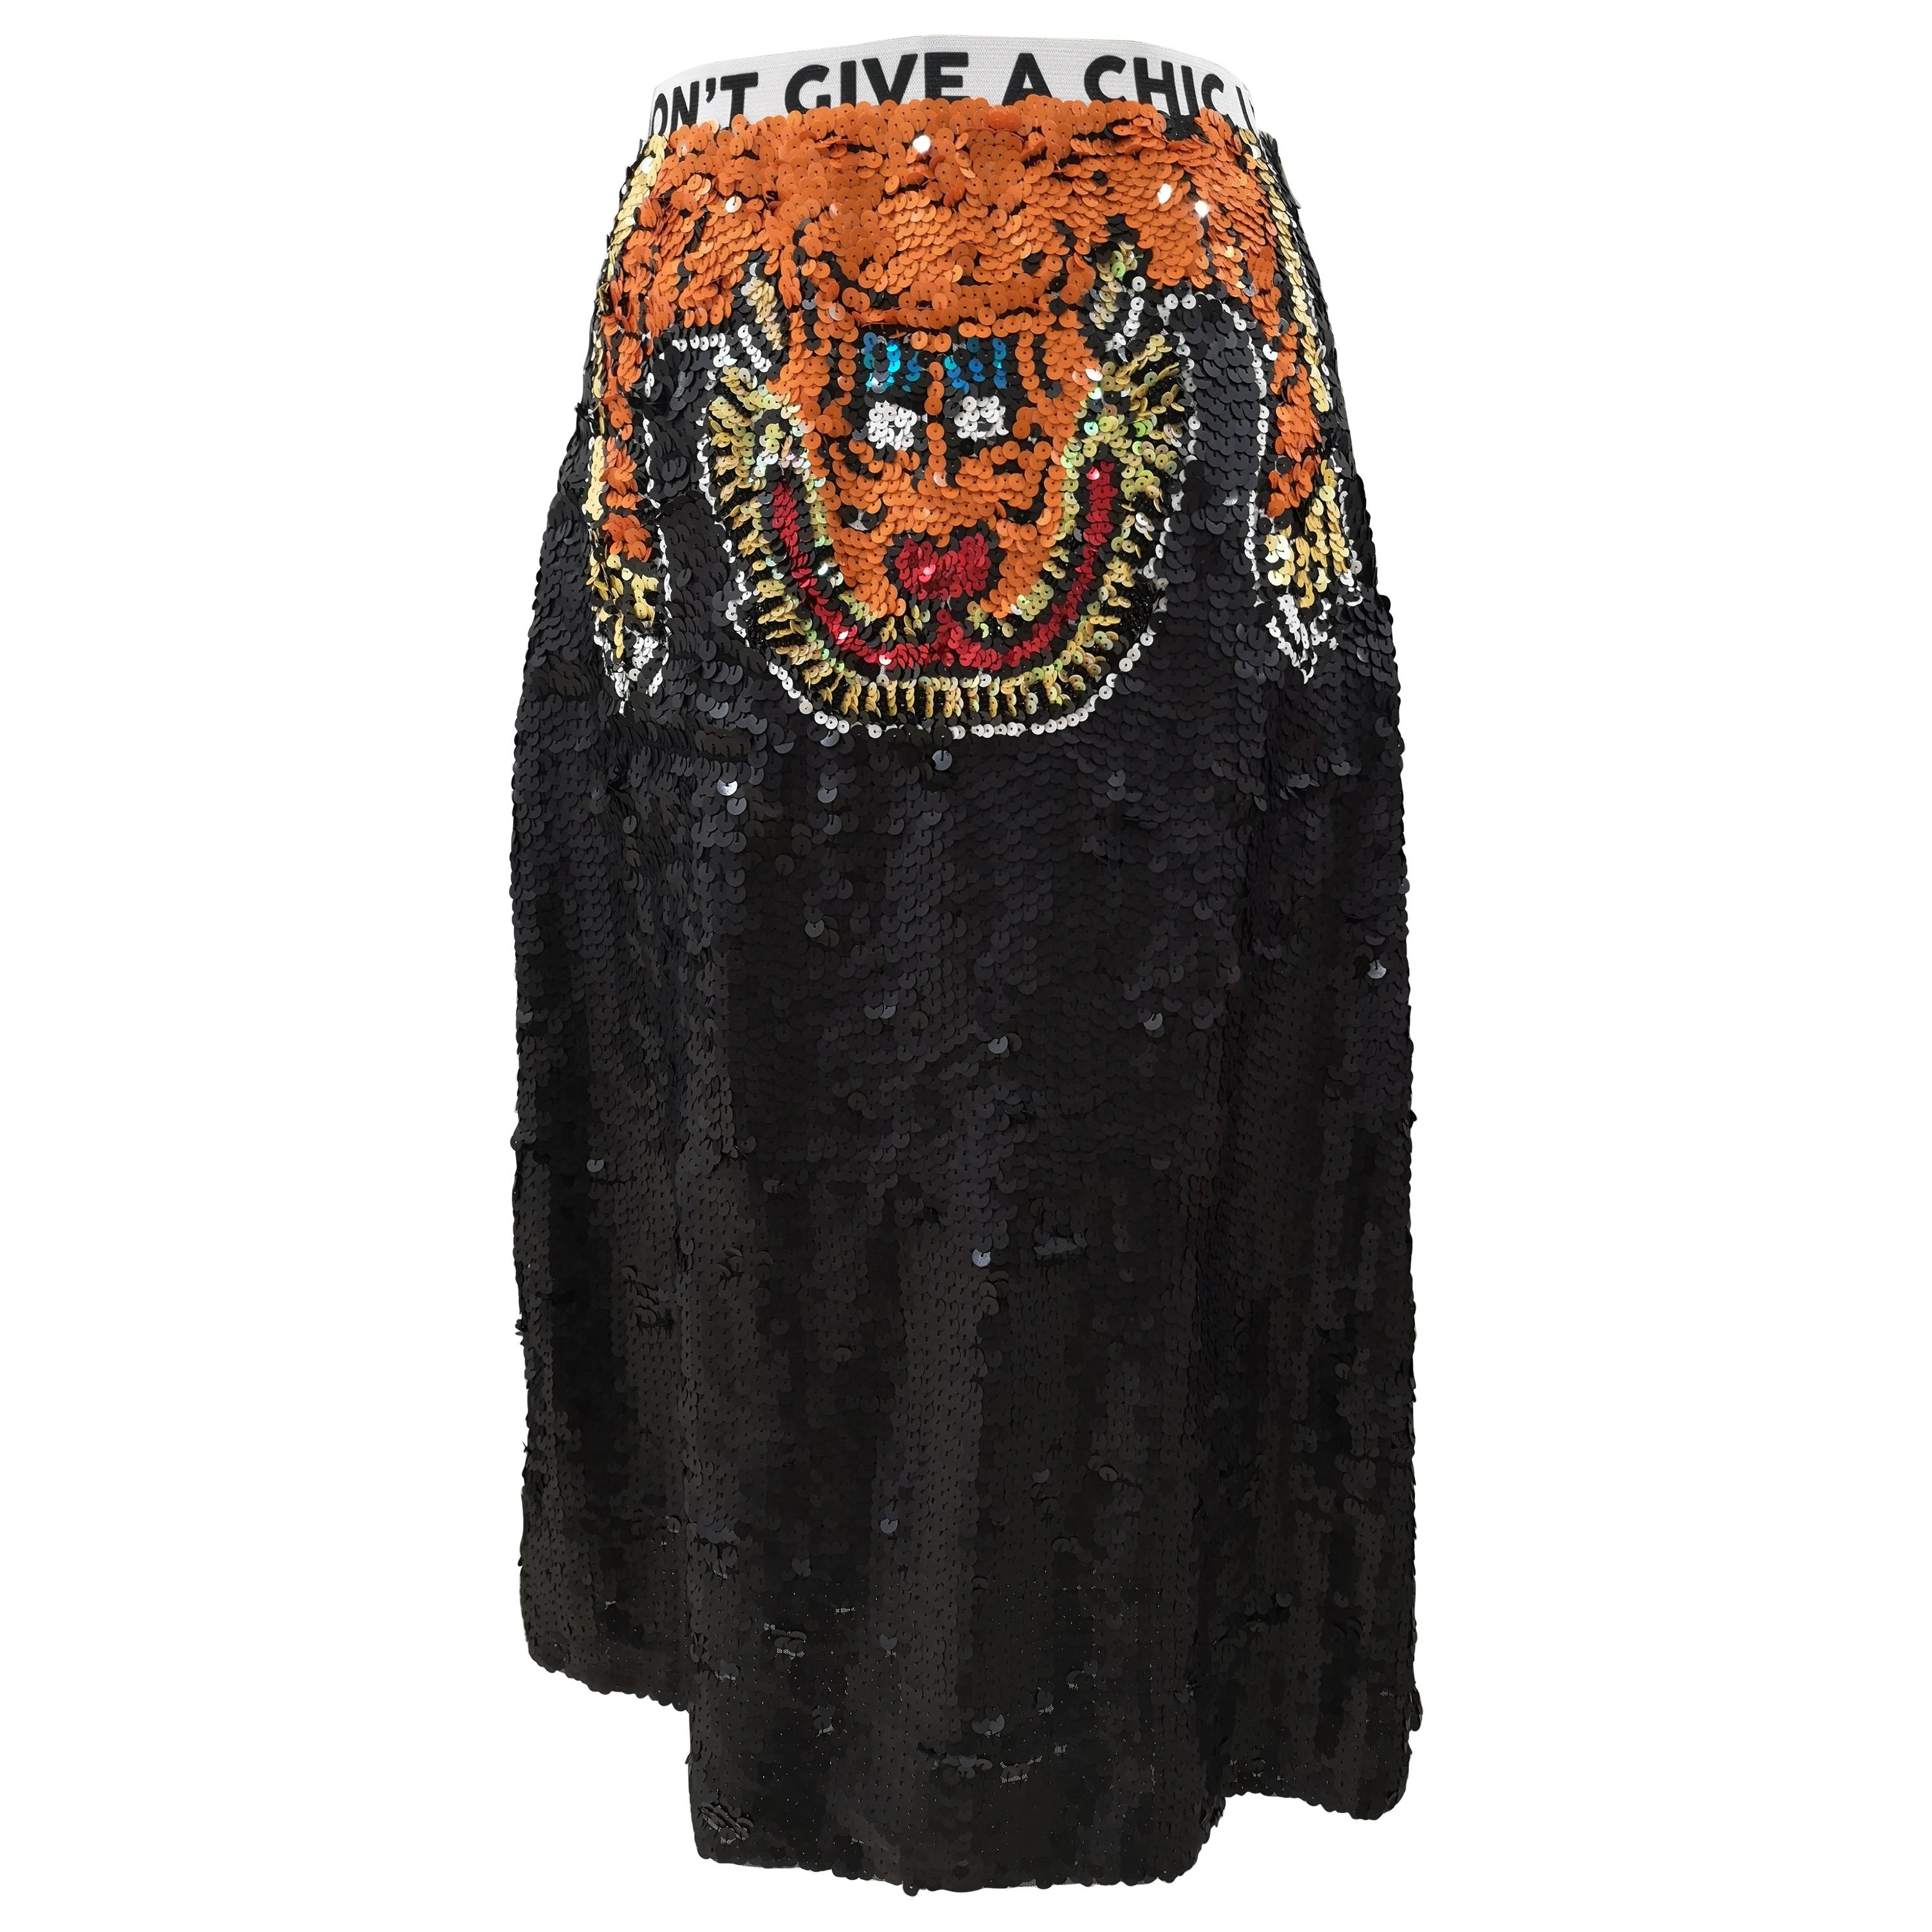 House of Muamua hand-beaded skirt